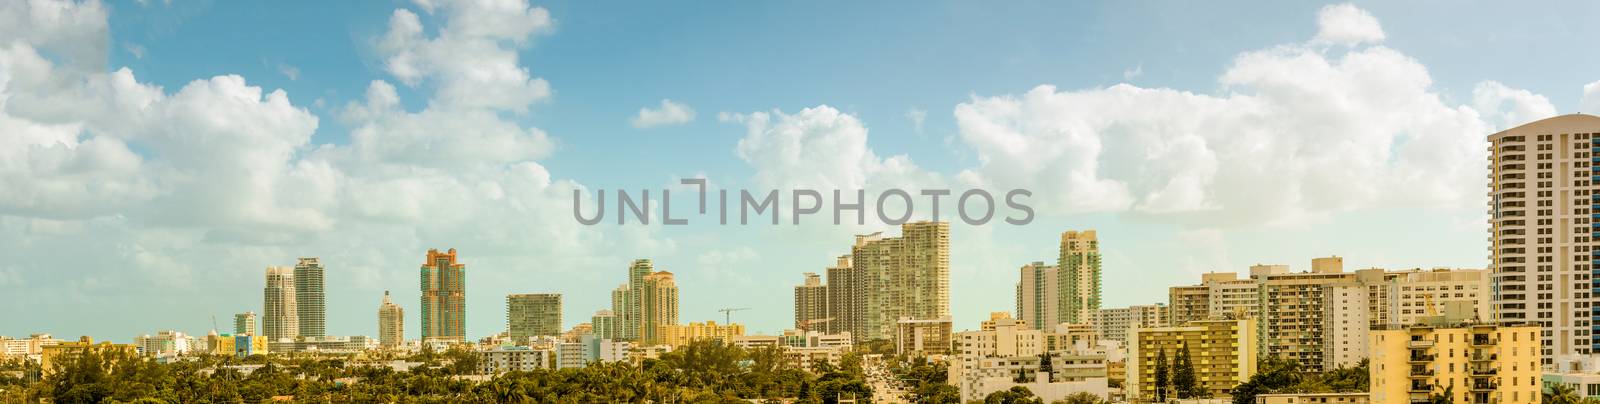 Panoramic shot of skyscrapers at South Beach, Miami Beach, Florida, USA.